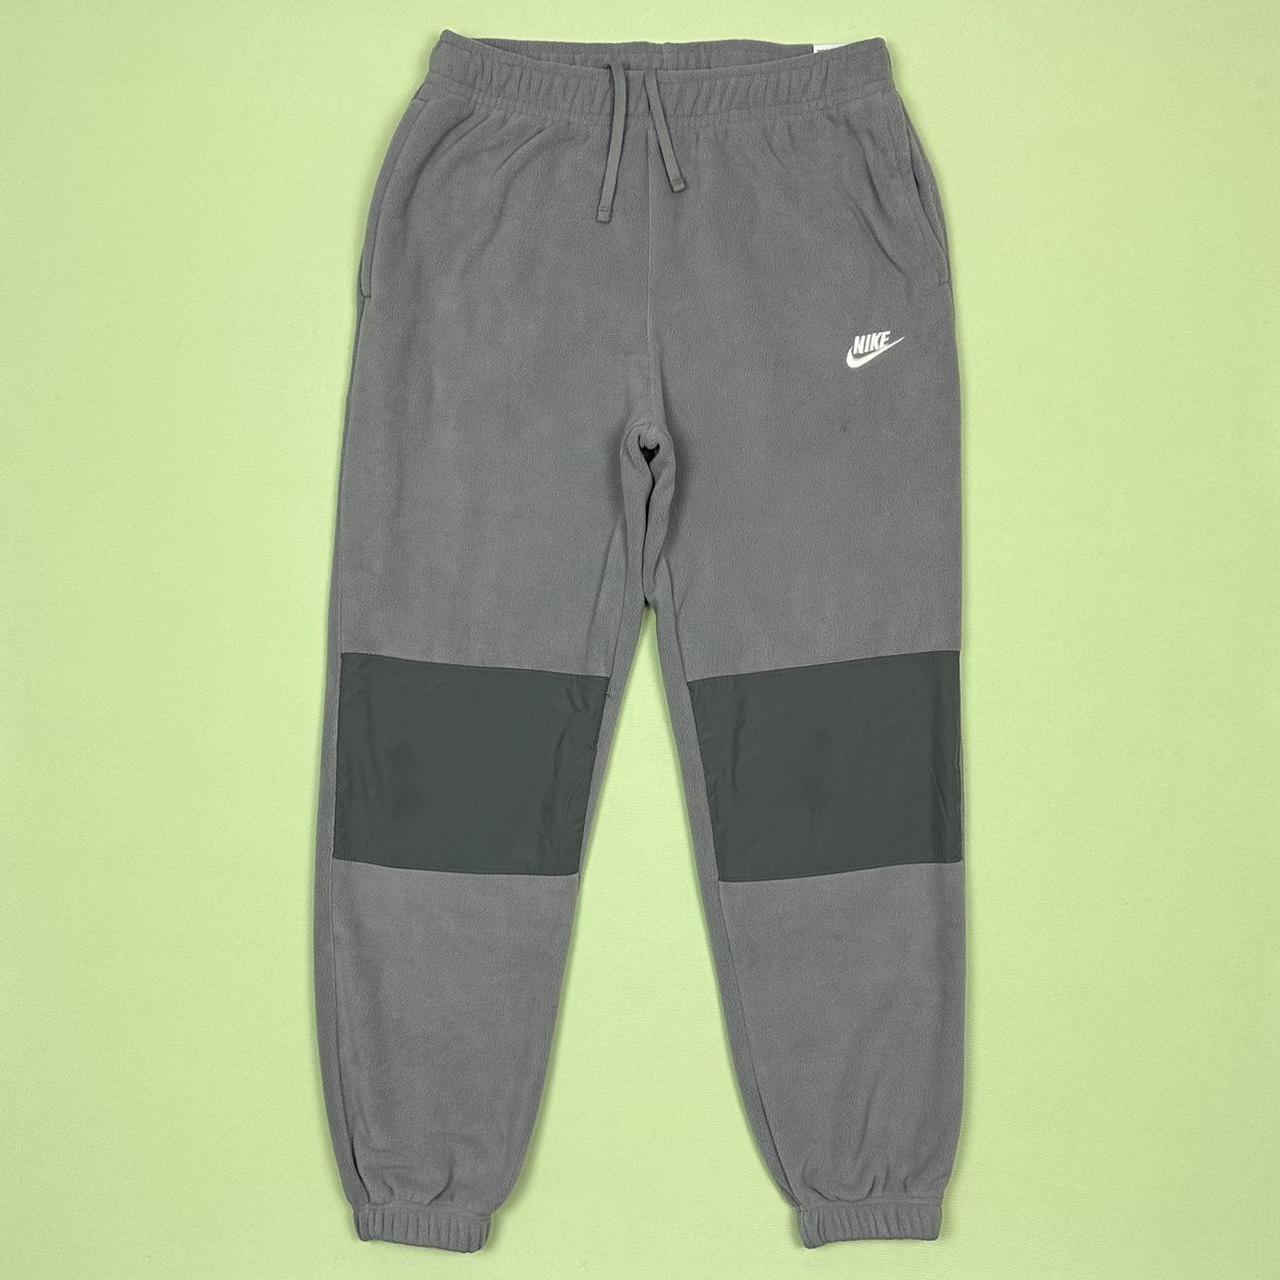 Grey Nike sweatpants, size medium - Depop